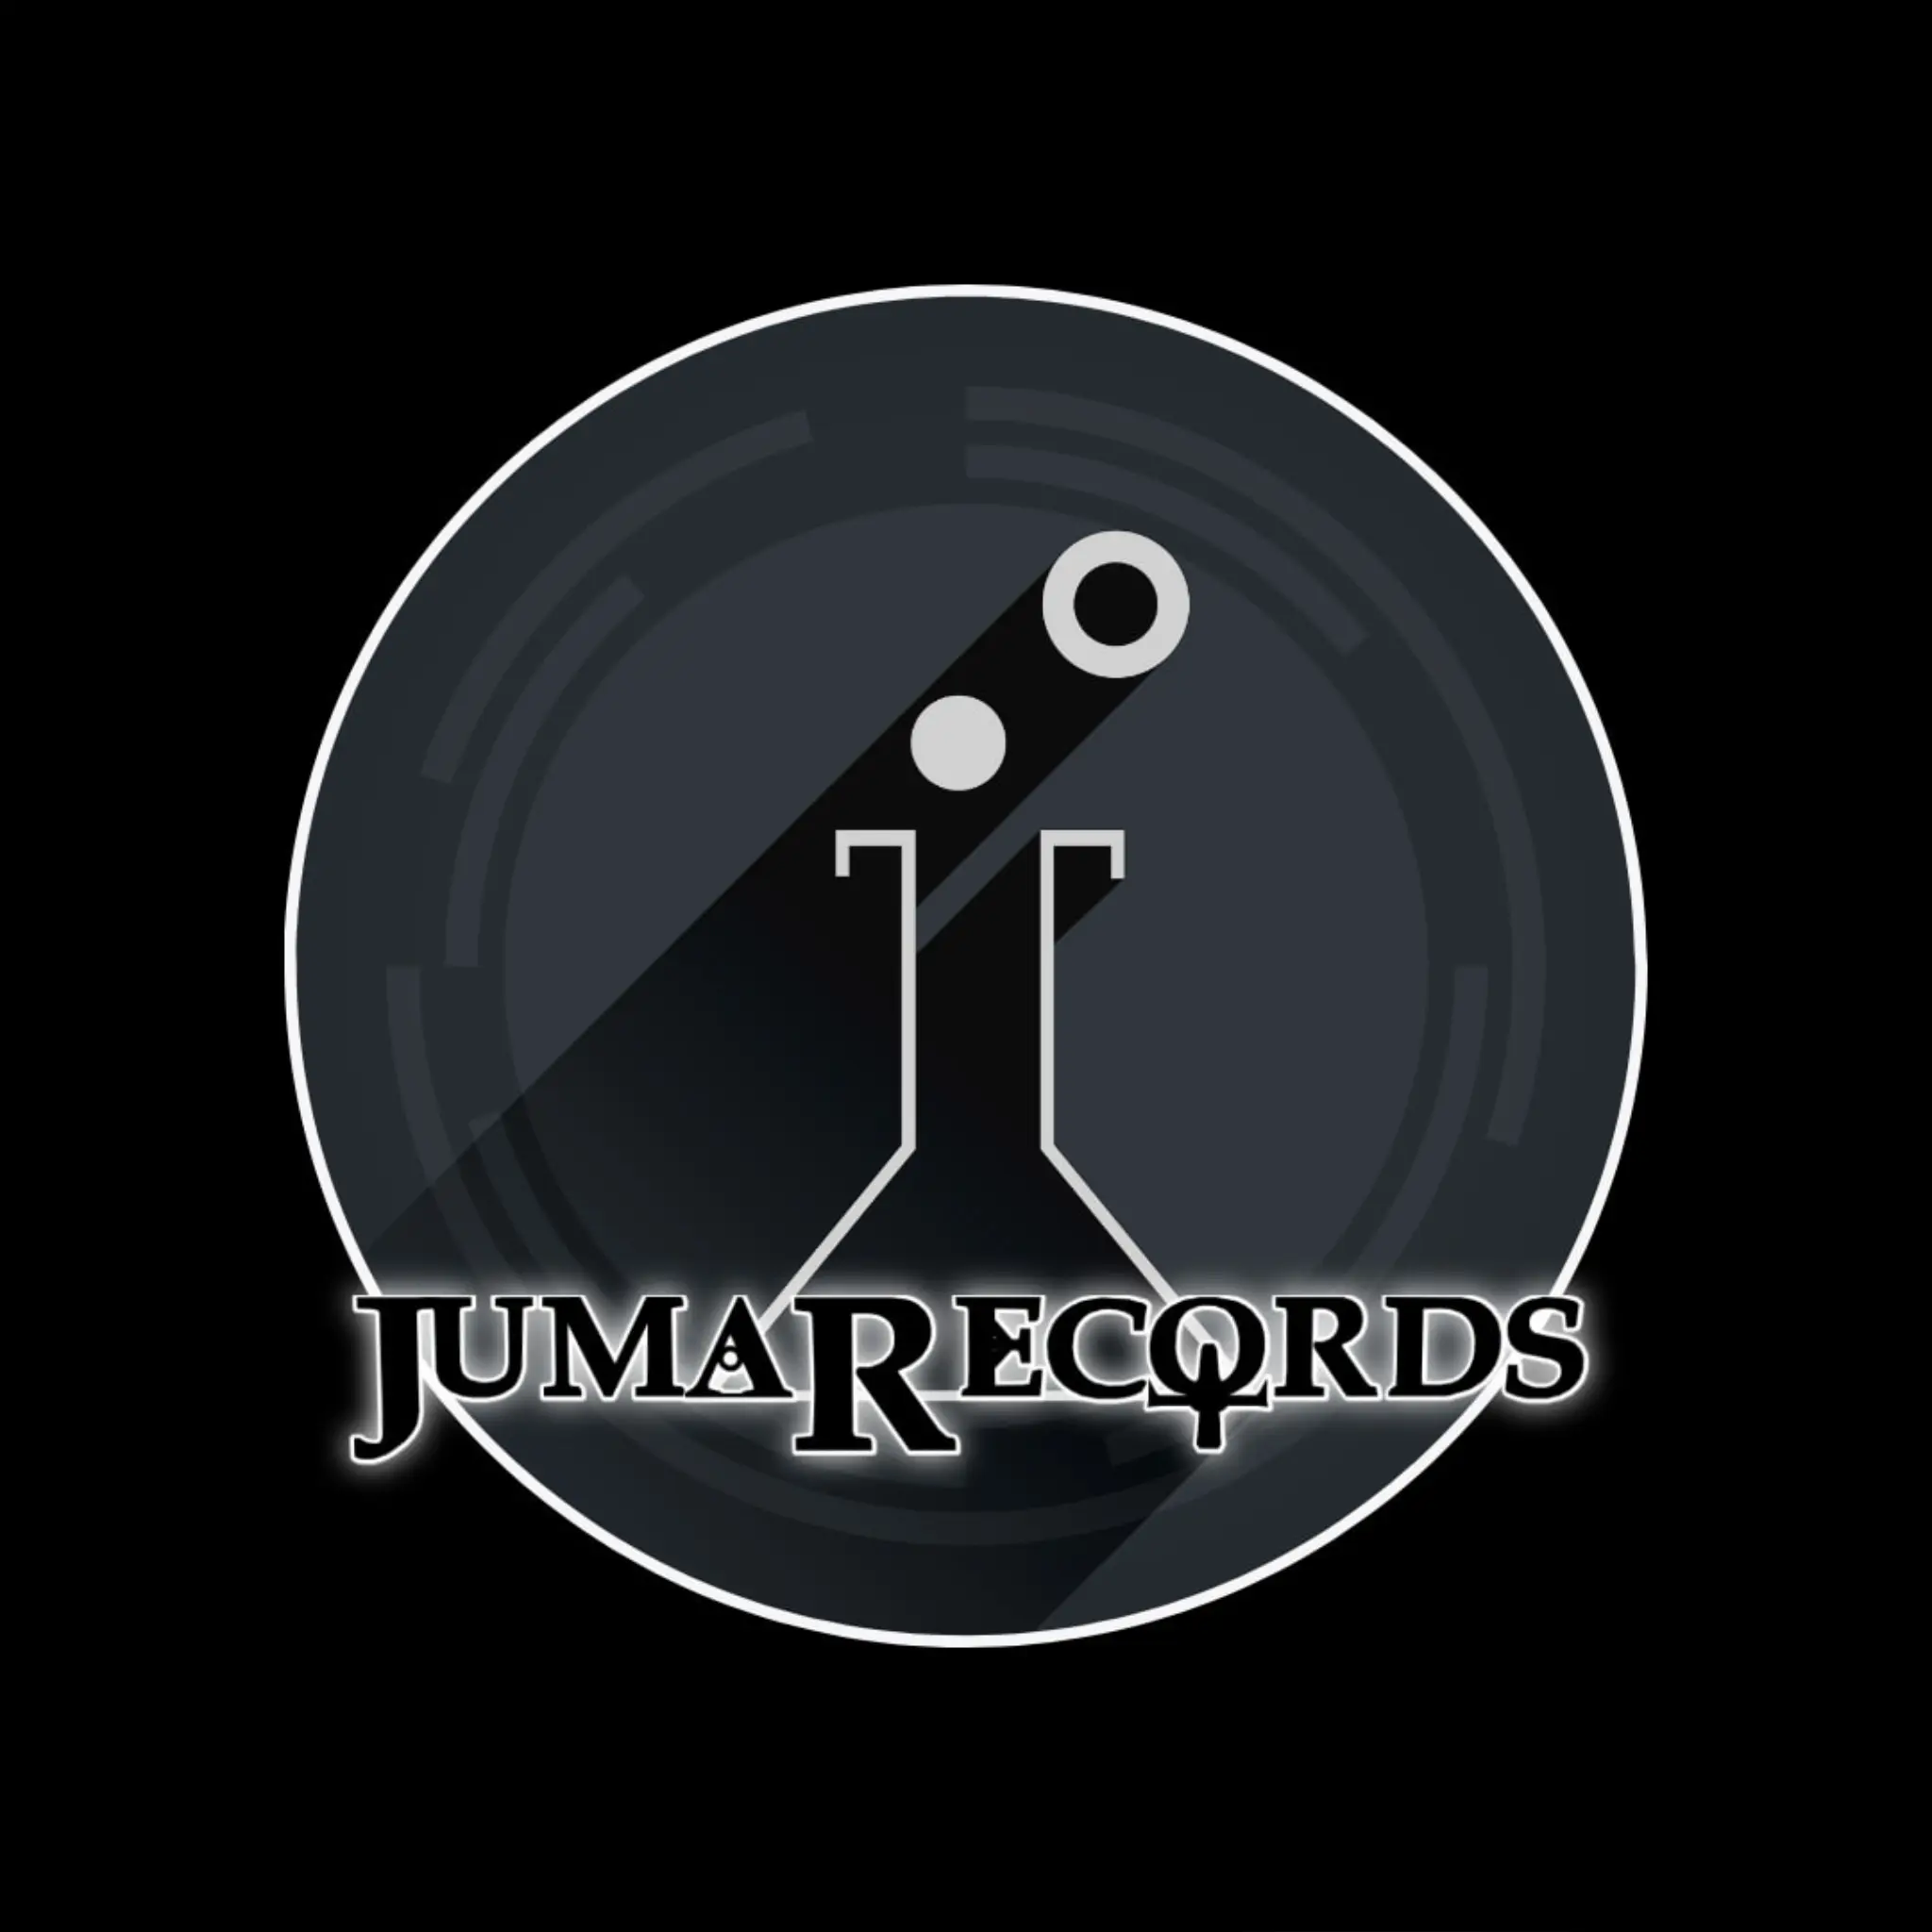 JumaRecords